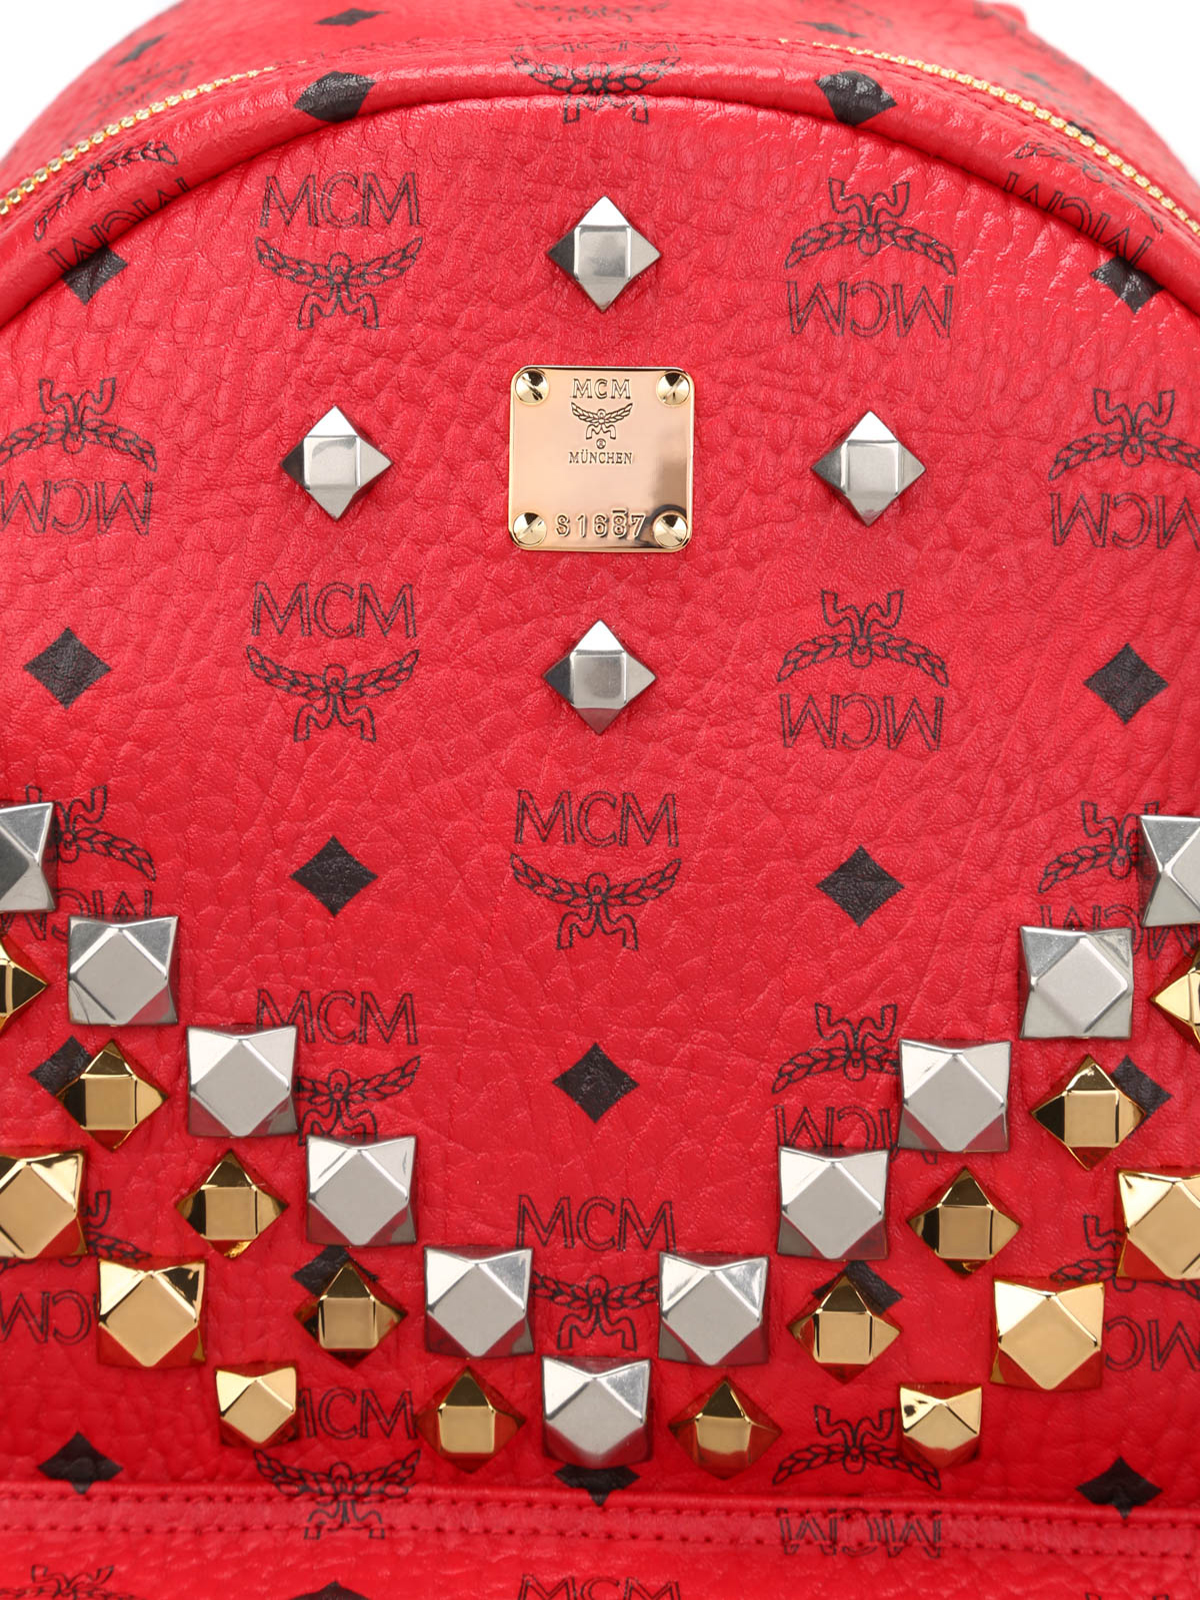 MCM Munchen Stud Medium Backpack Red